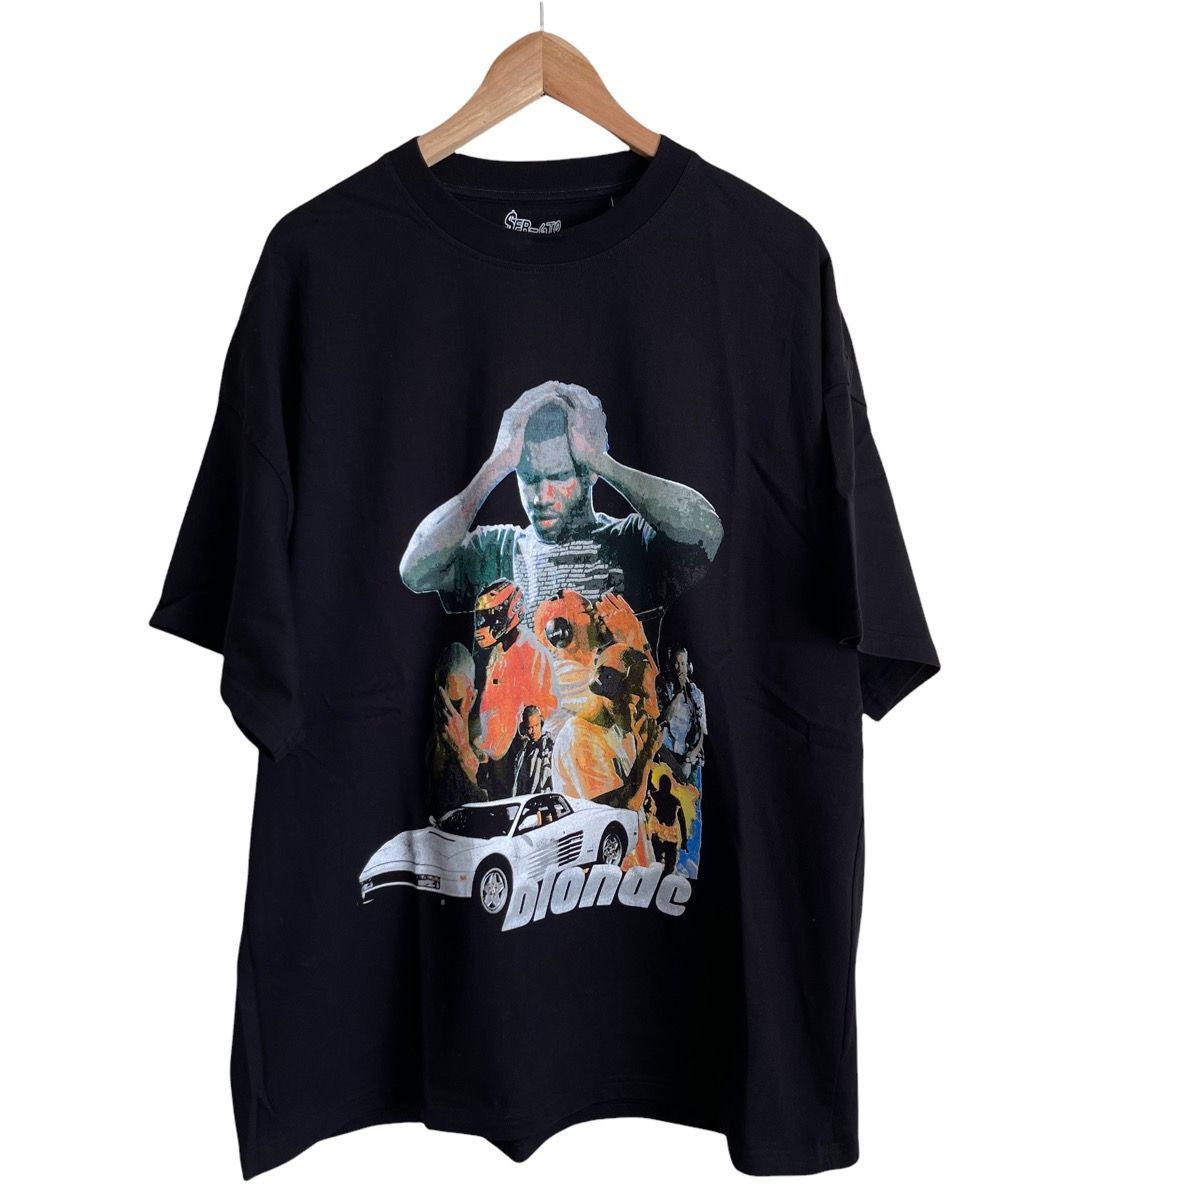 Frank Ocean Sergio Calabasas Frank Ocean Blonde t shirt size XL Size US XL / EU 56 / 4 - 1 Preview